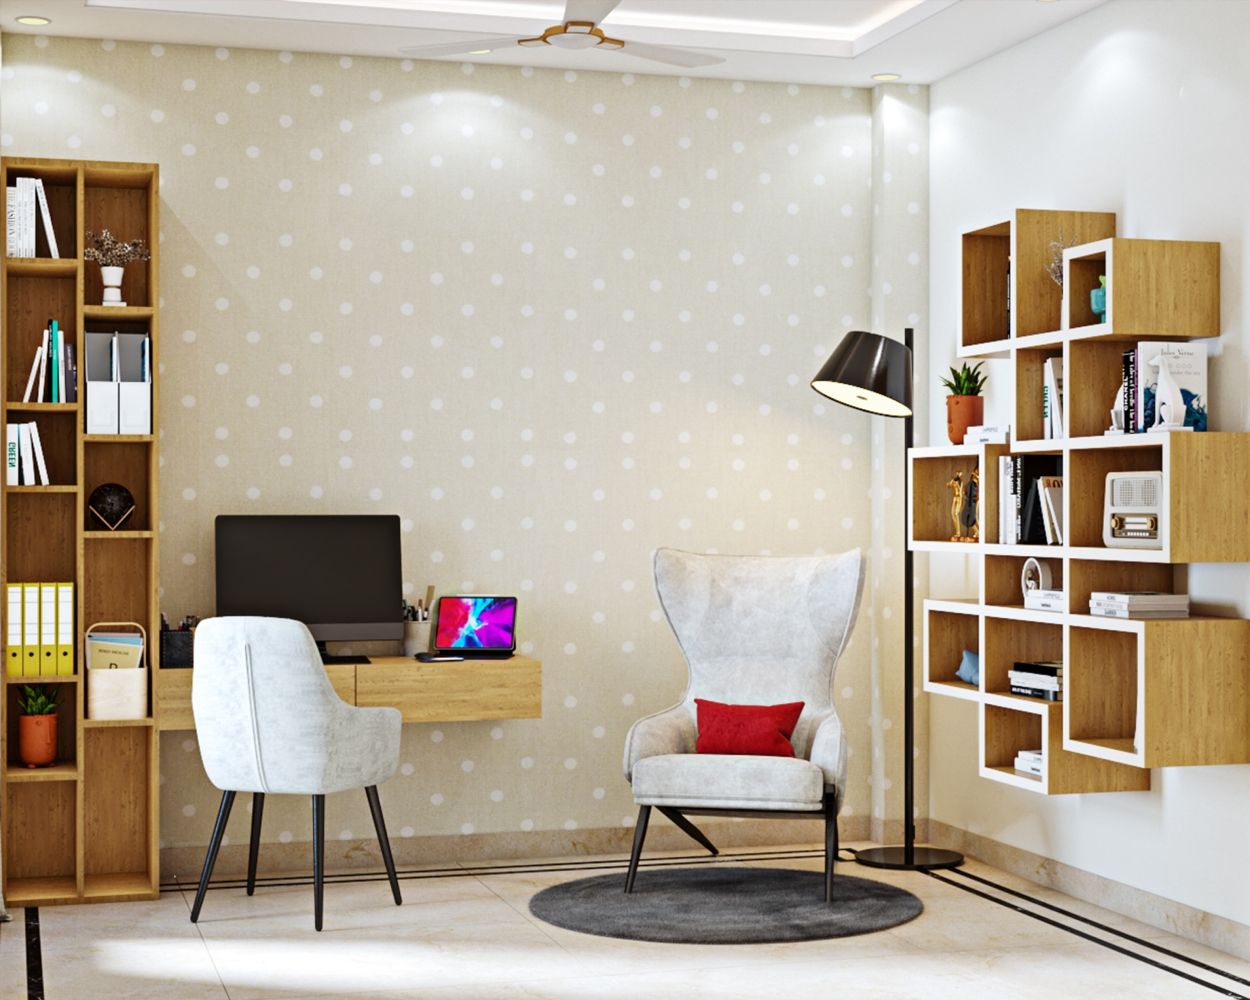 Modern Study Room Design With Polka Dot Wallpaper